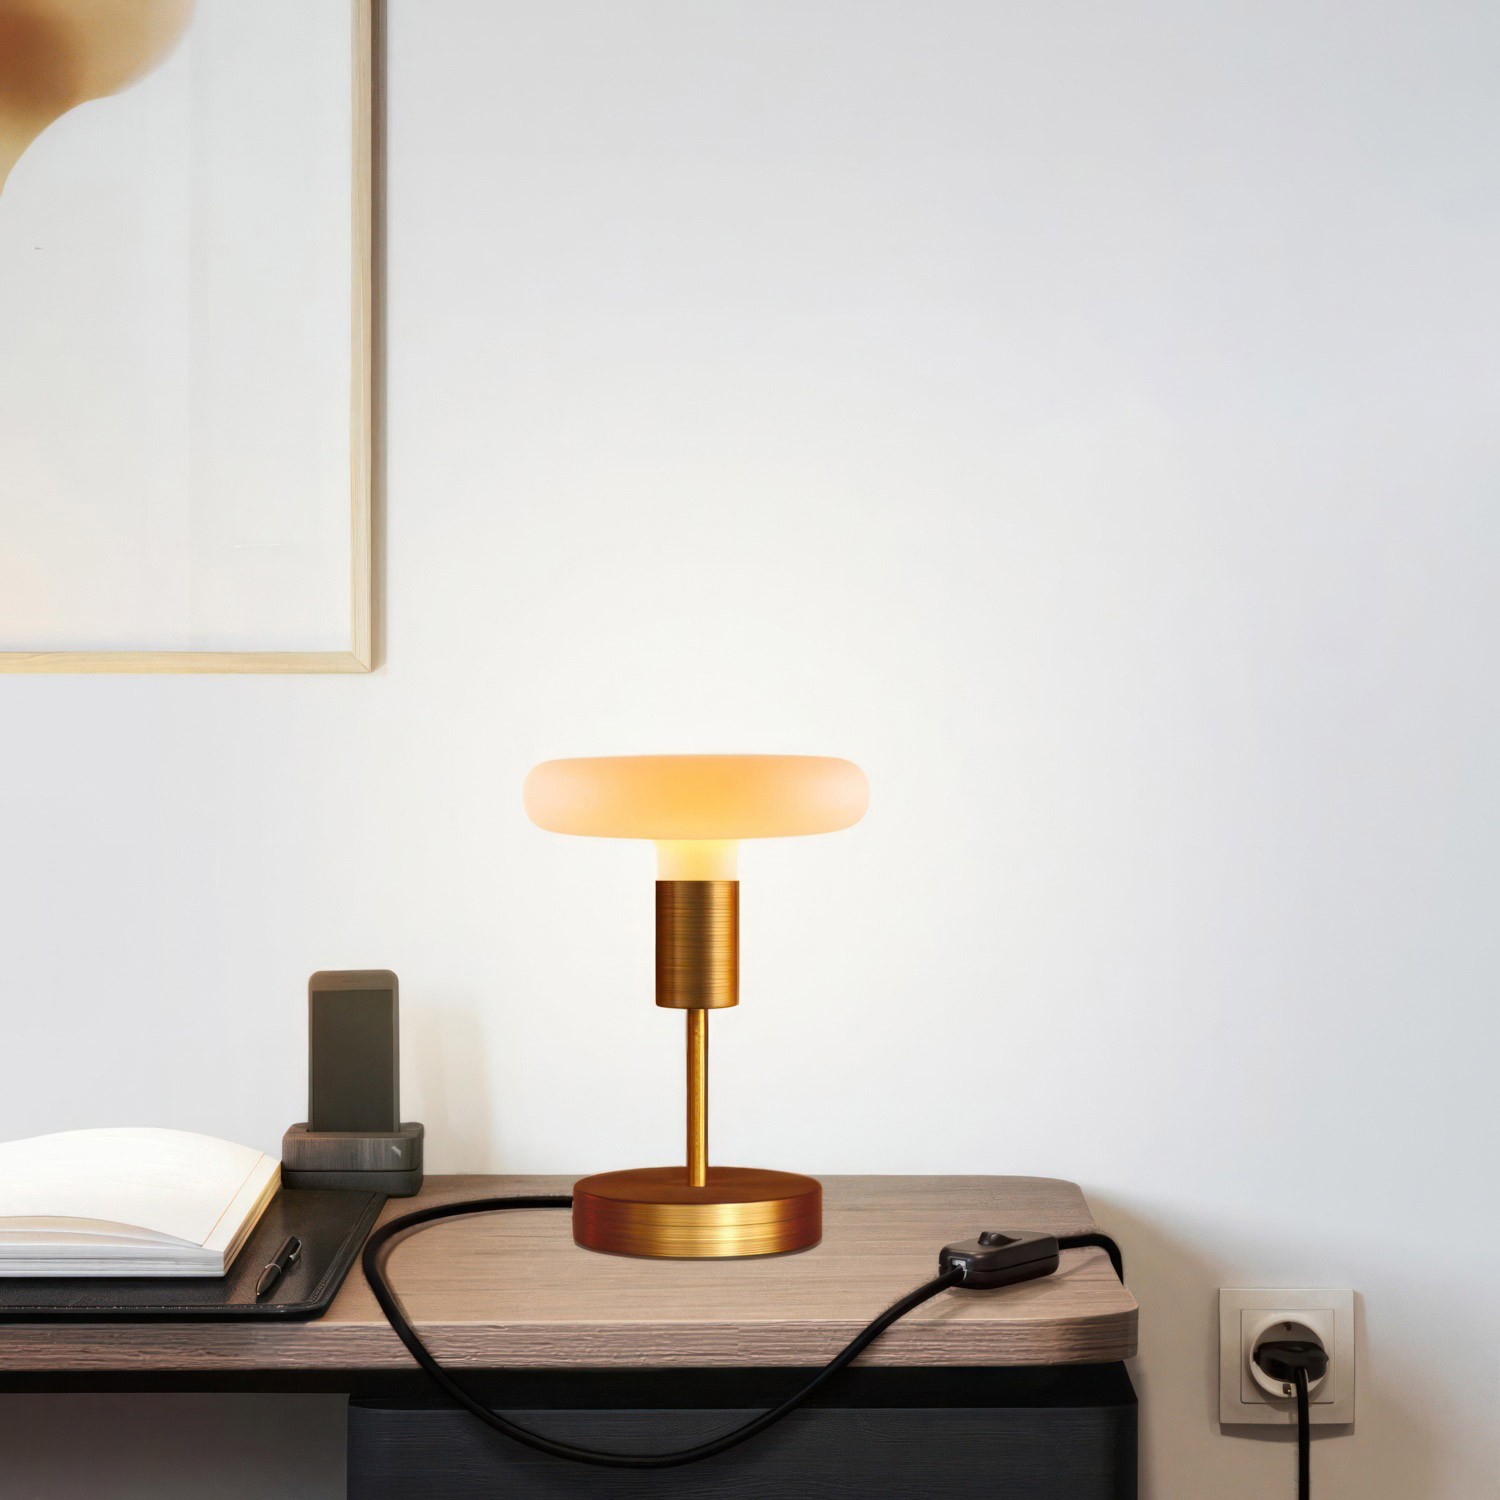 Alzaluce Dash Metal Table Lamp with two-pin plug